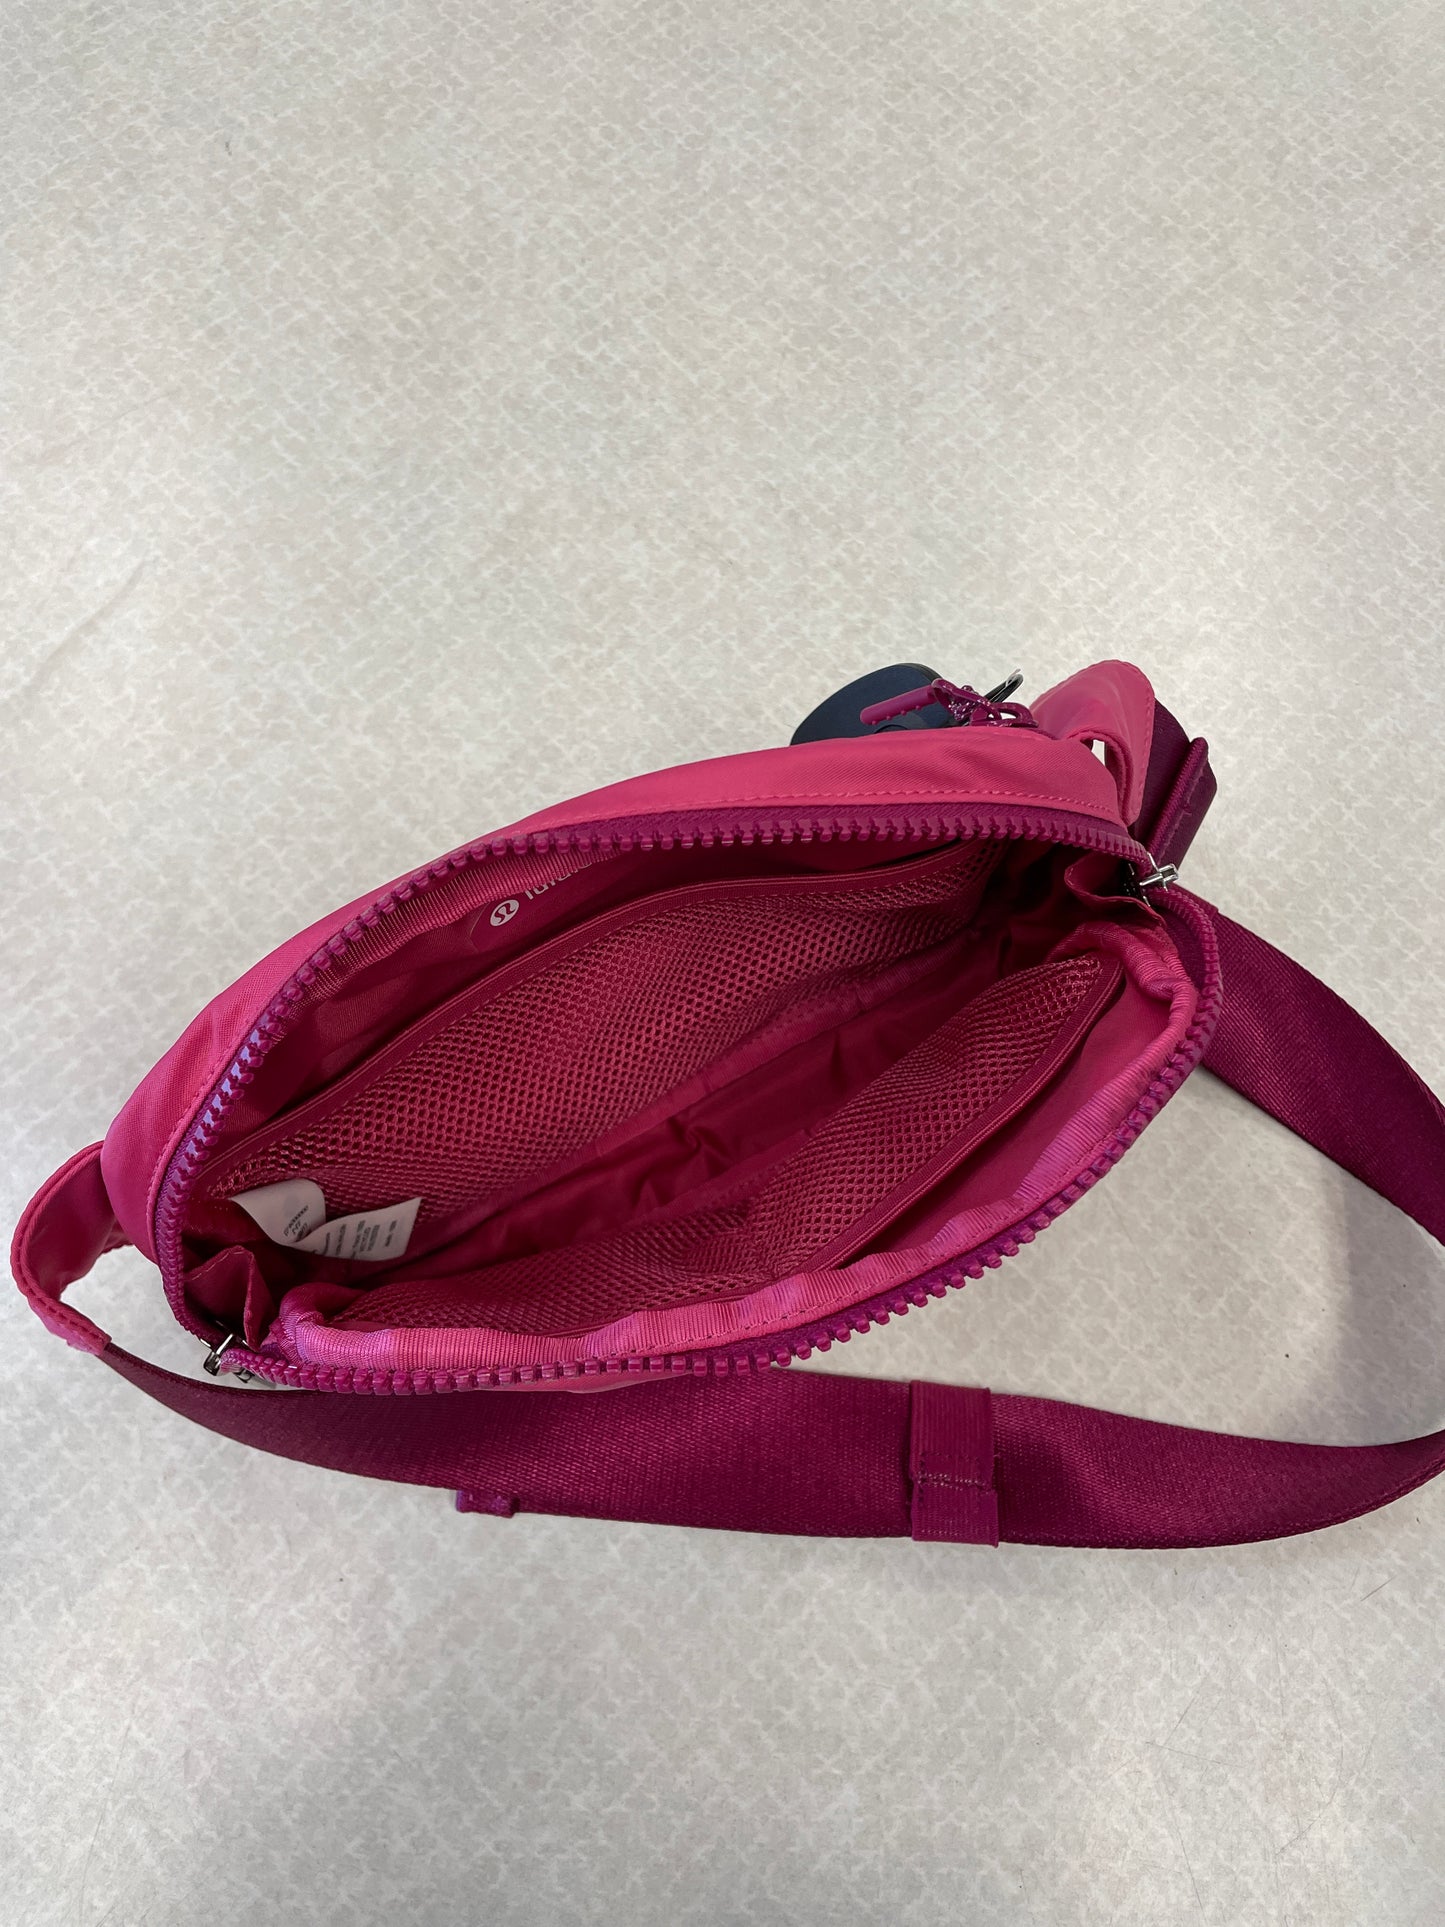 Belt Bag By Lululemon  Size: Large